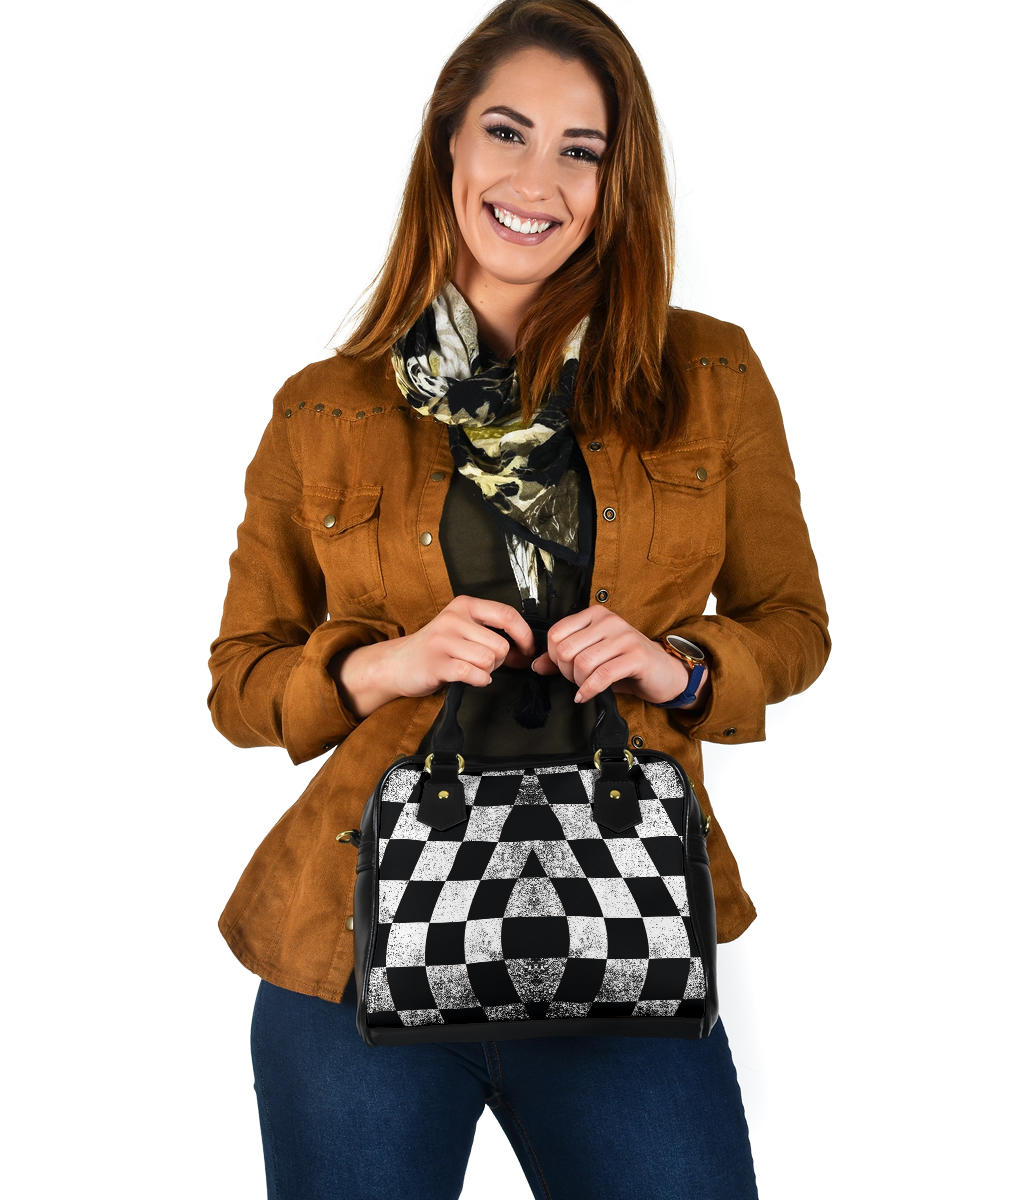 Racing Dirty Checkered purse